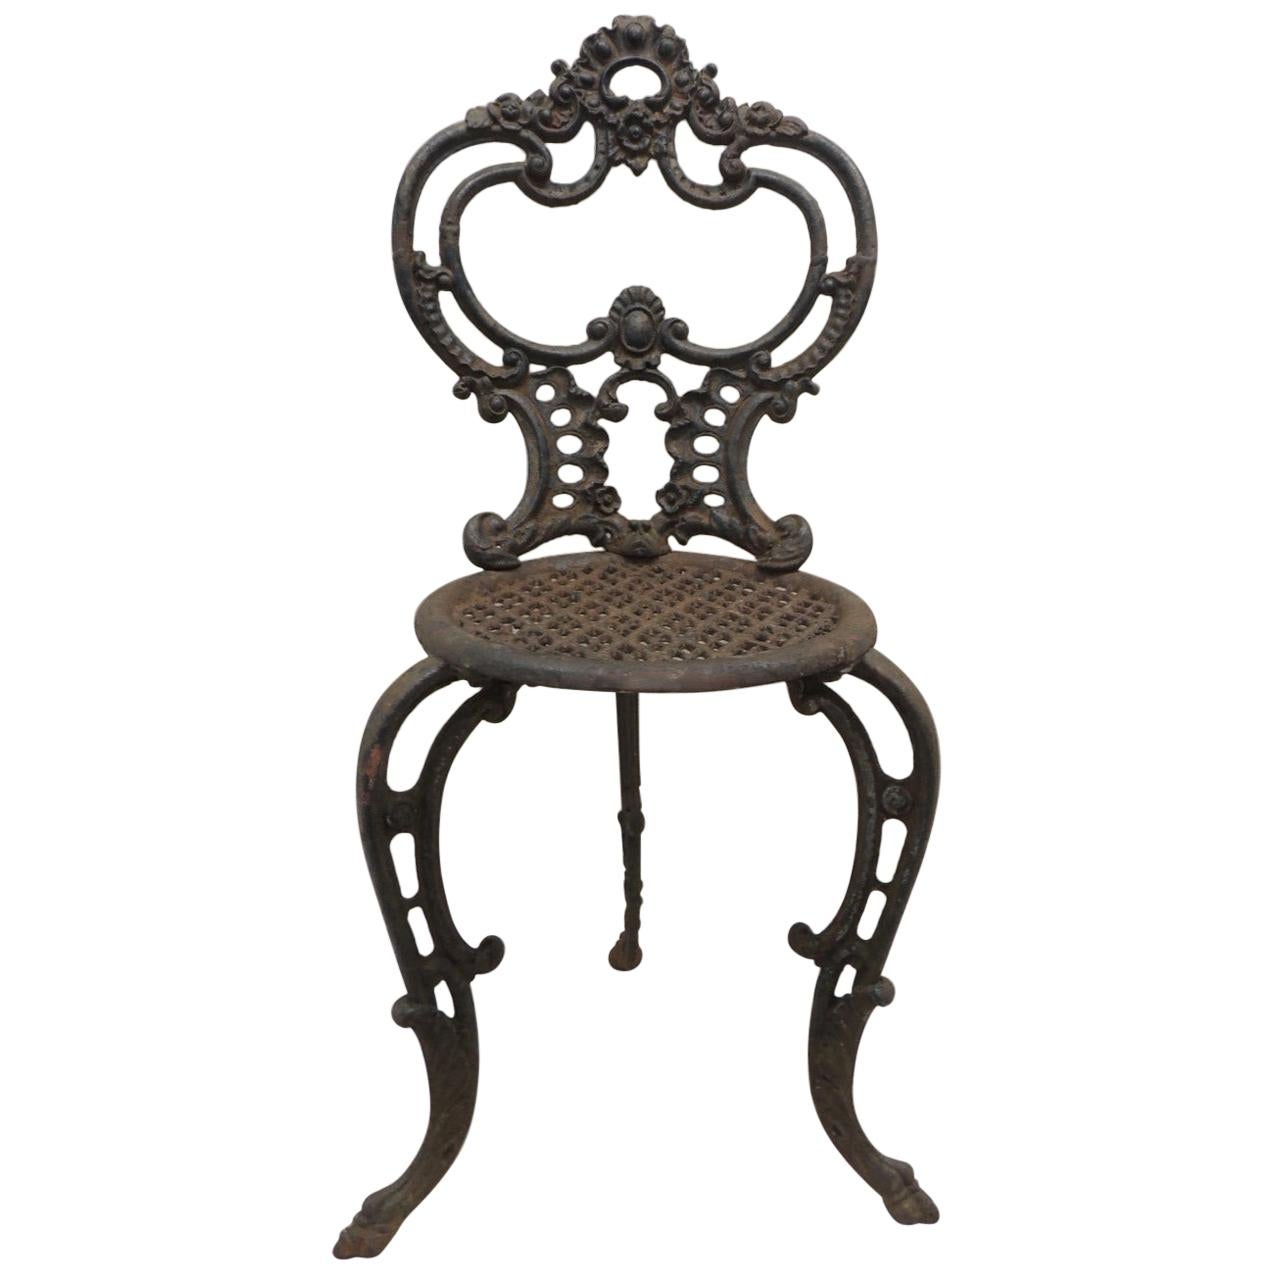 Antique Rustic Victorian Garden Chair